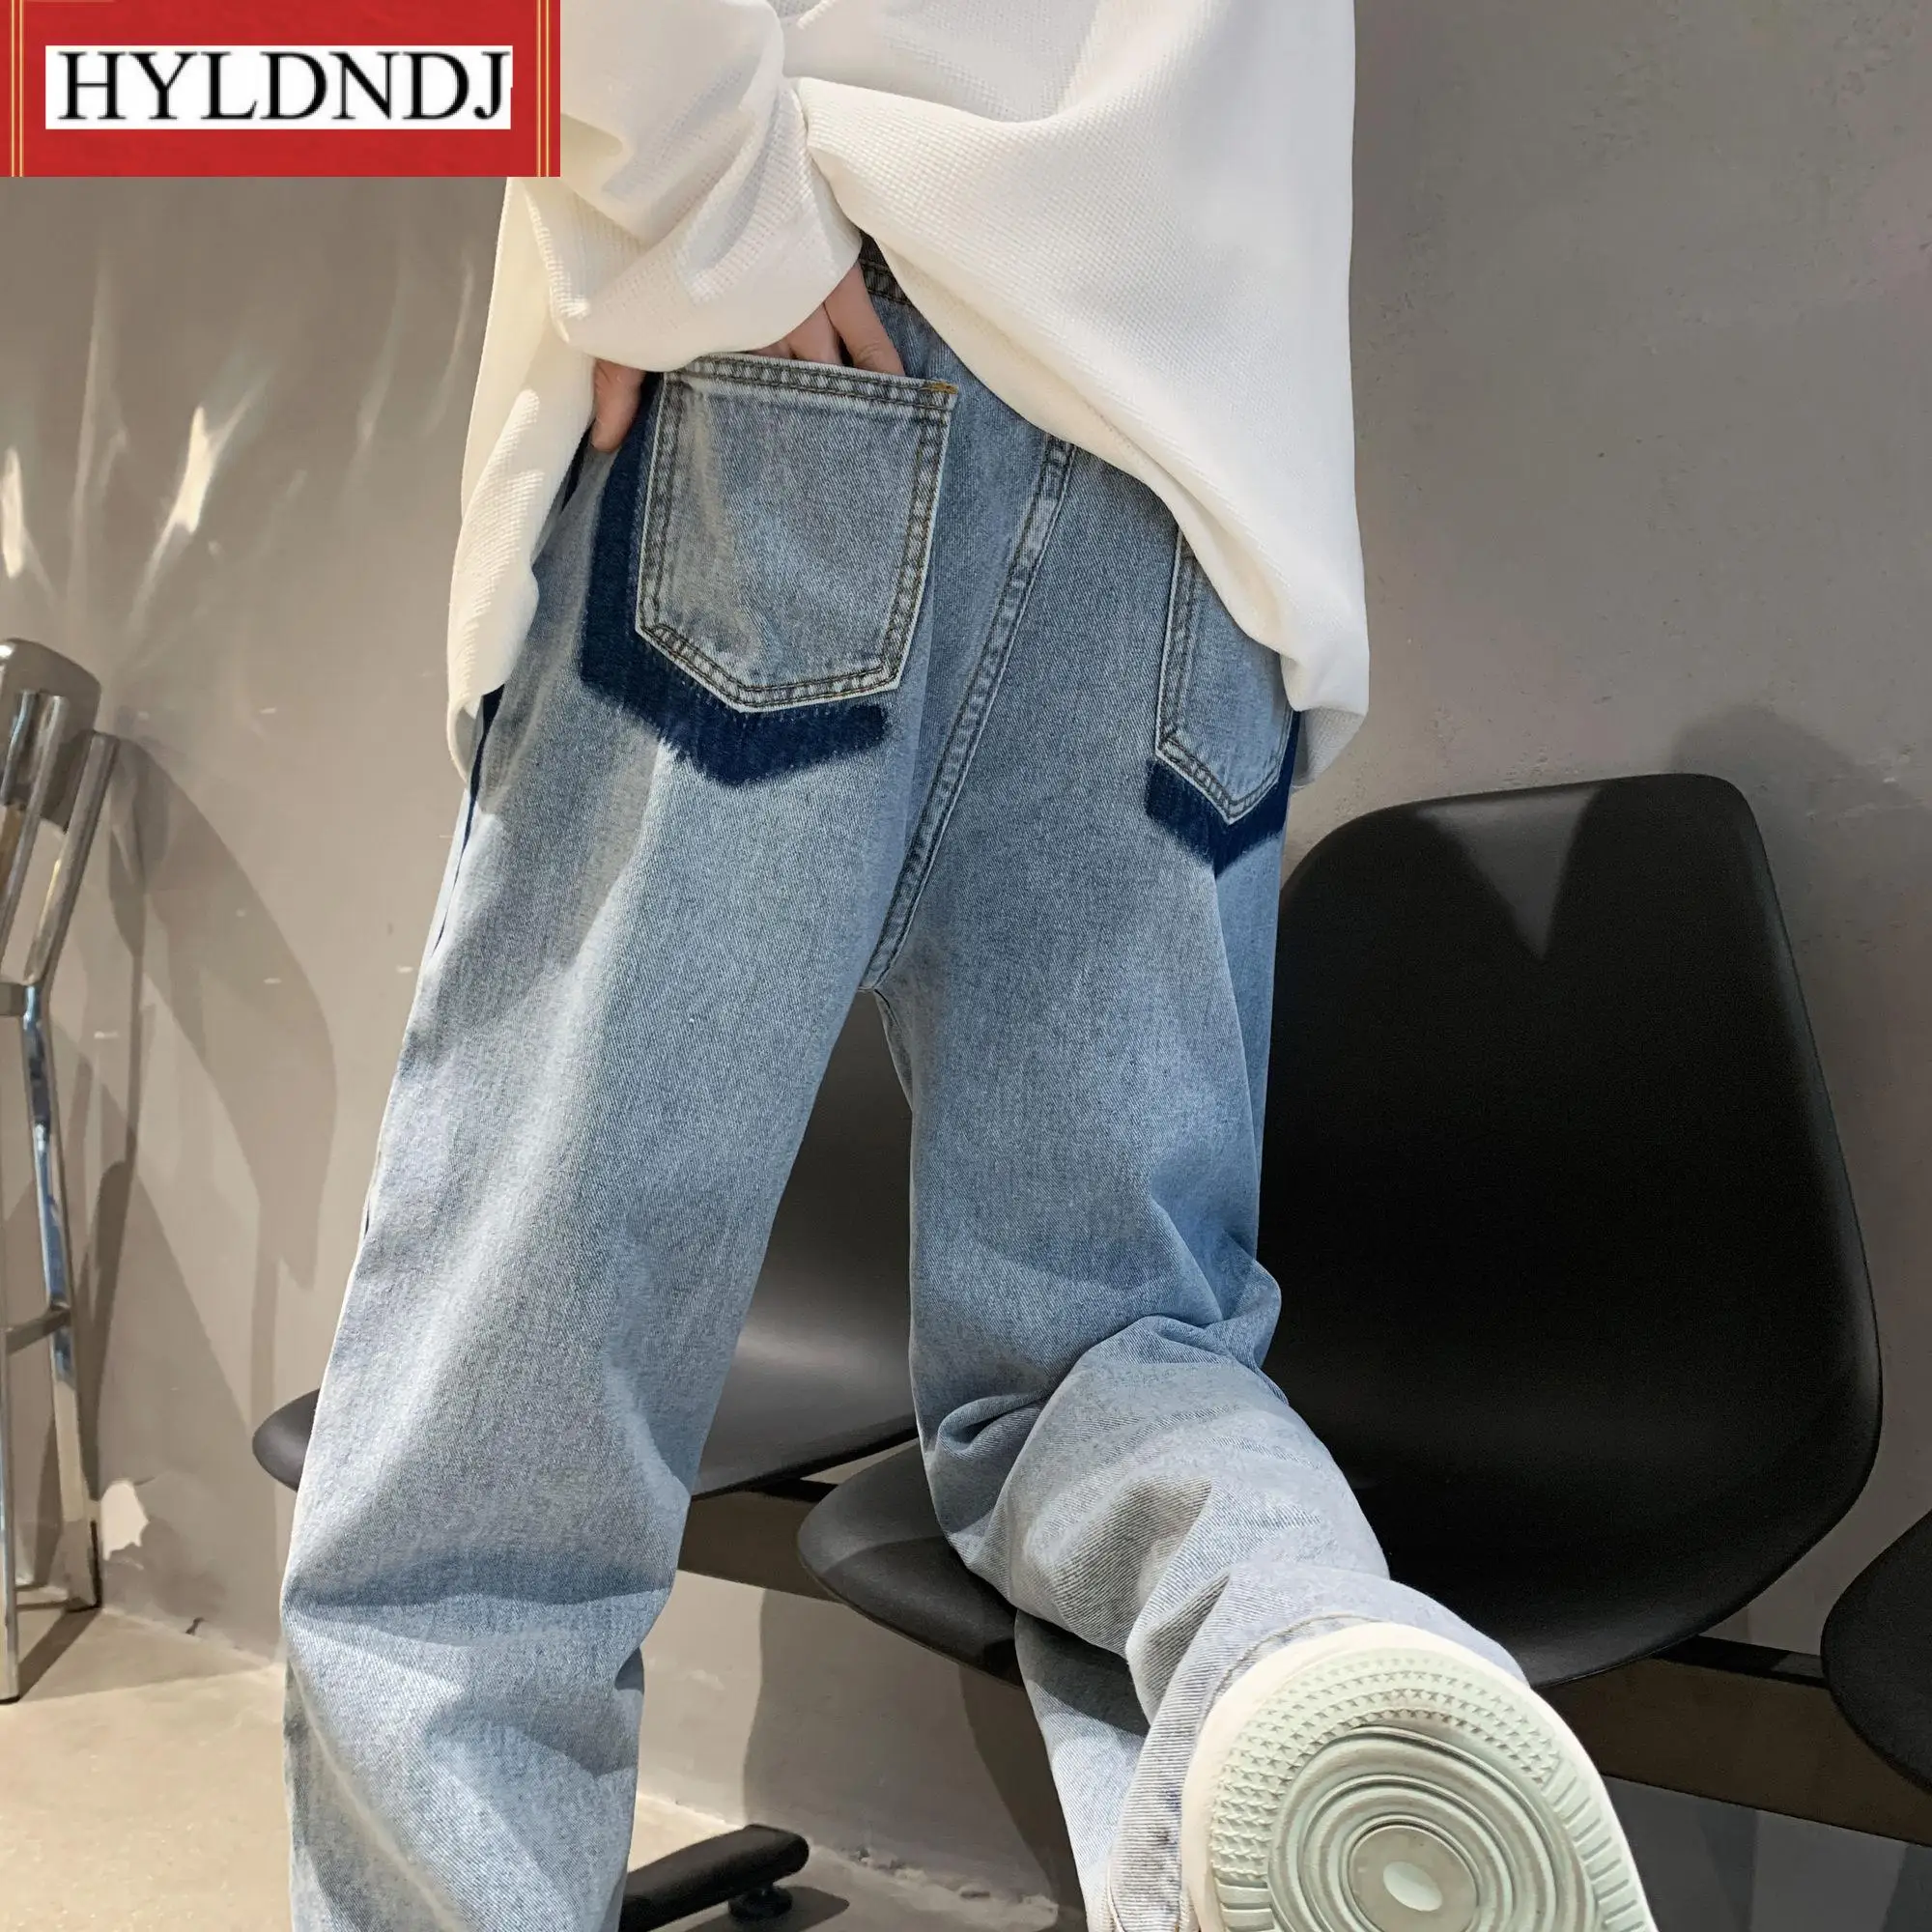 New Male Minority Design Sense Splicing Jeans Overlapping Stripes High Street Vibe American Trousersfloor Length Straight